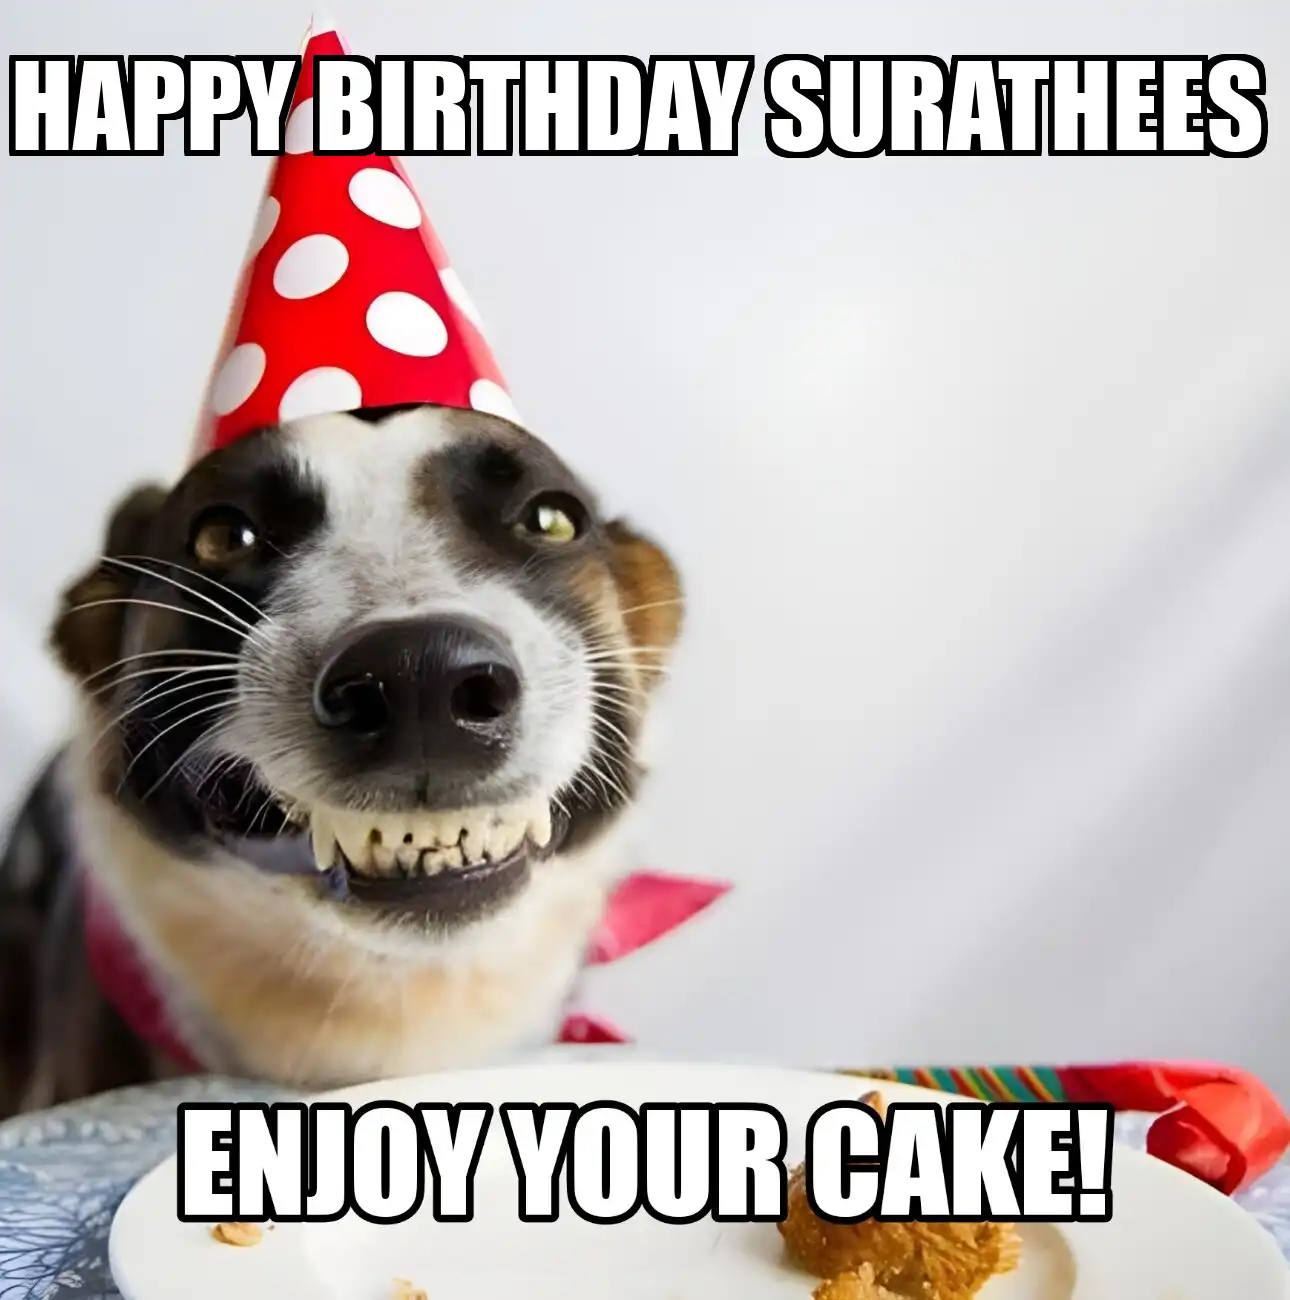 Happy Birthday Surathees Enjoy Your Cake Dog Meme